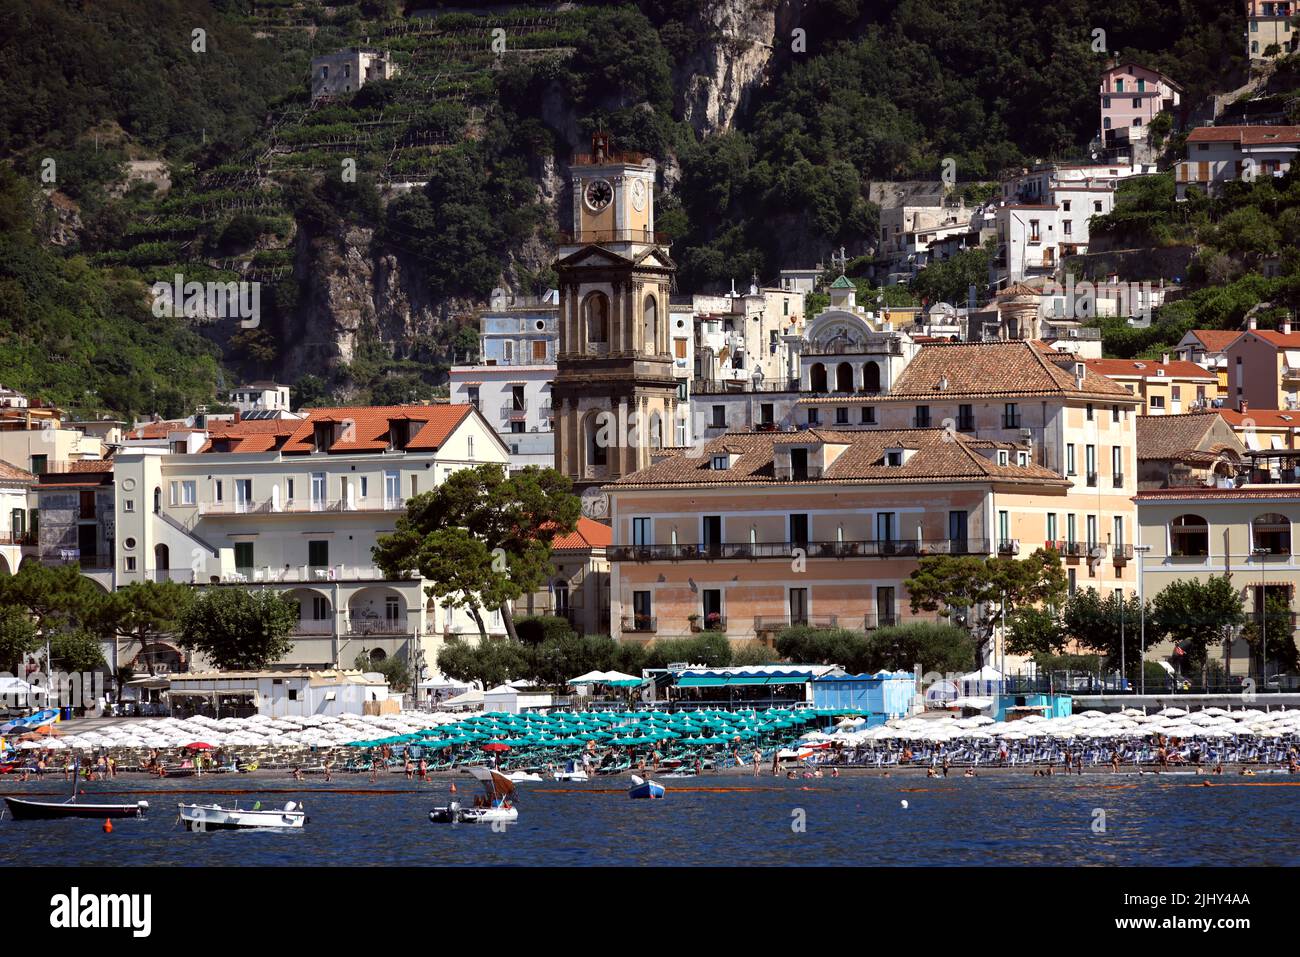 Minori, Amalfi coast Italy  picture by Gavin Rodgers/ Pixel8000 Stock Photo